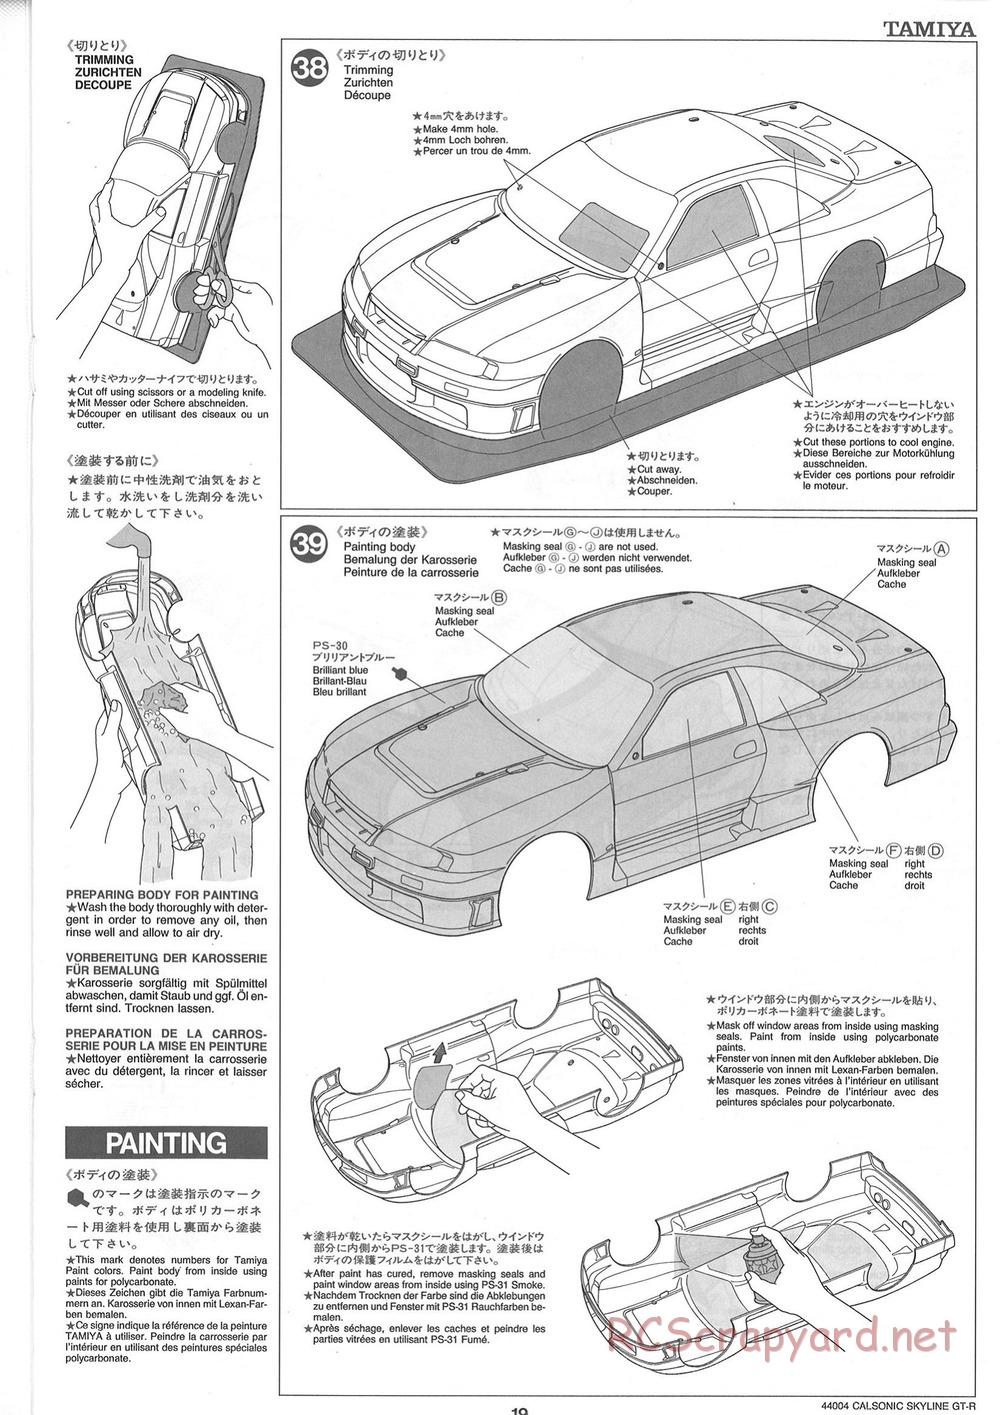 Tamiya - Calsonic GT-R - TGX Mk.1 Chassis - Manual - Page 19